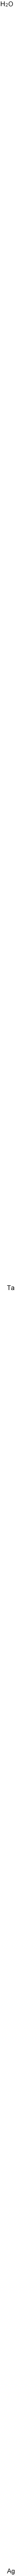 silver tantalum trioxide Structure